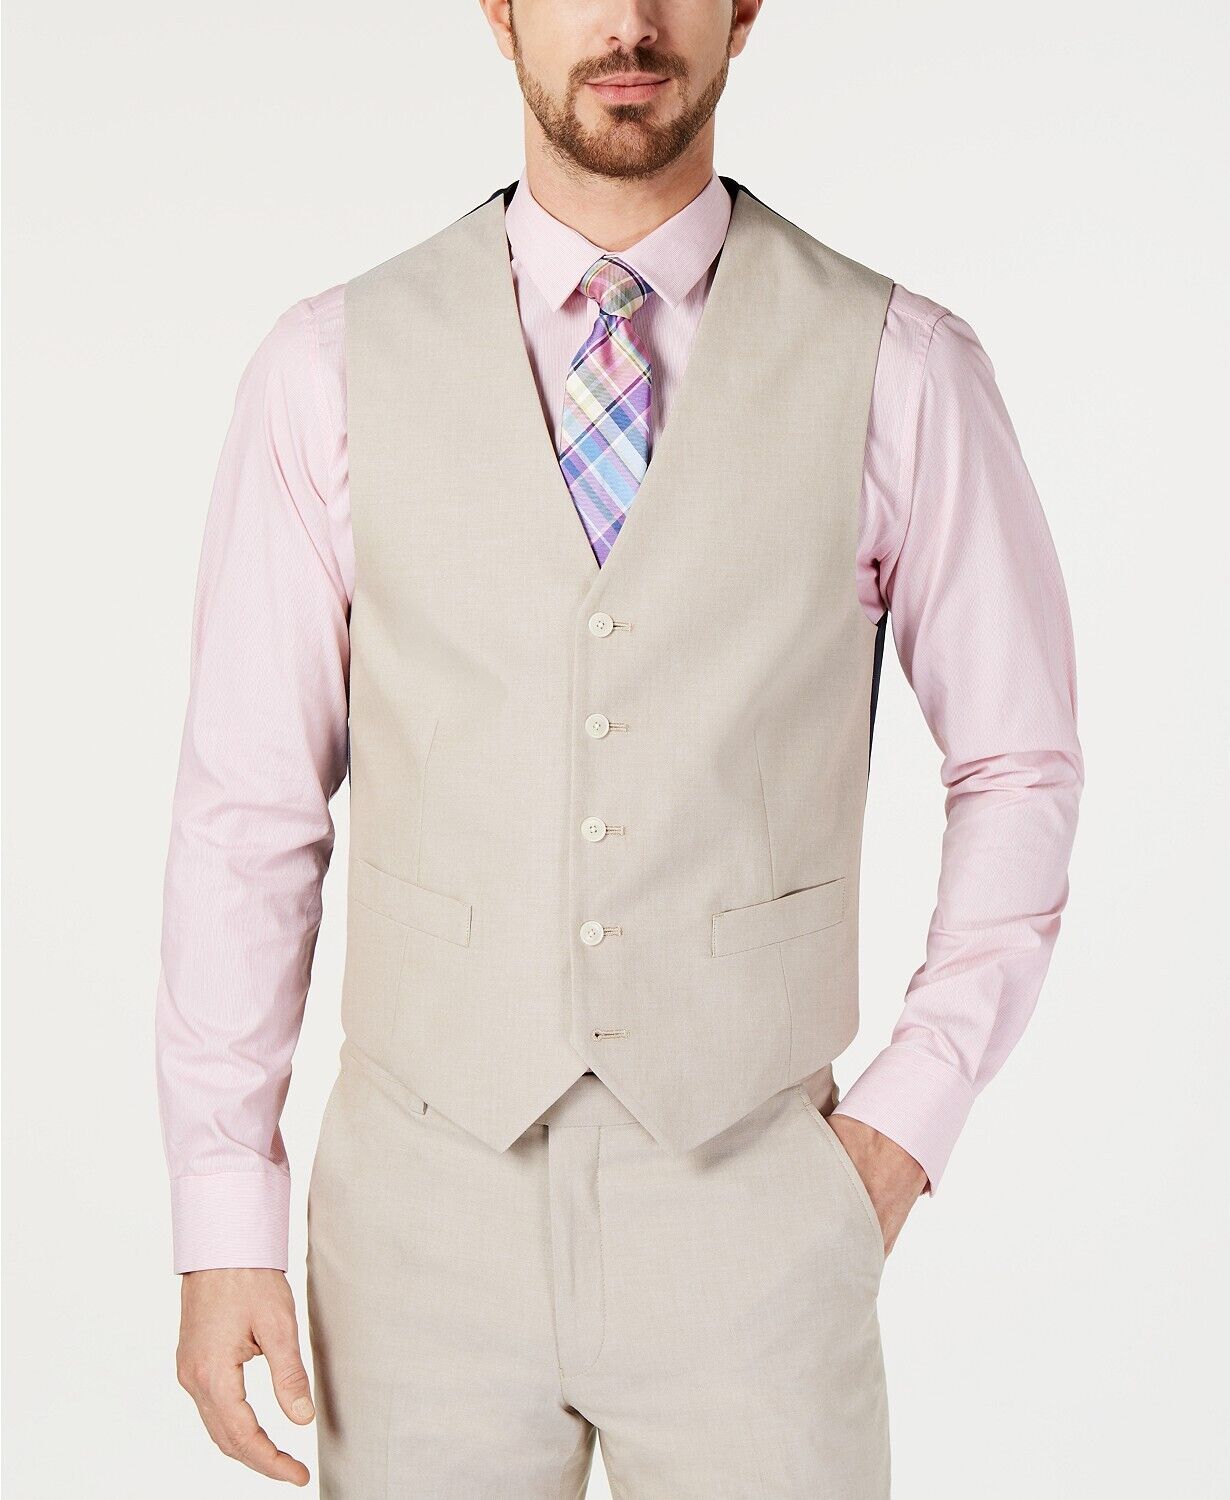 Tommy Hilfiger Men's Suit Vest Small Tan Modern-Fit Flex Stretch Solid